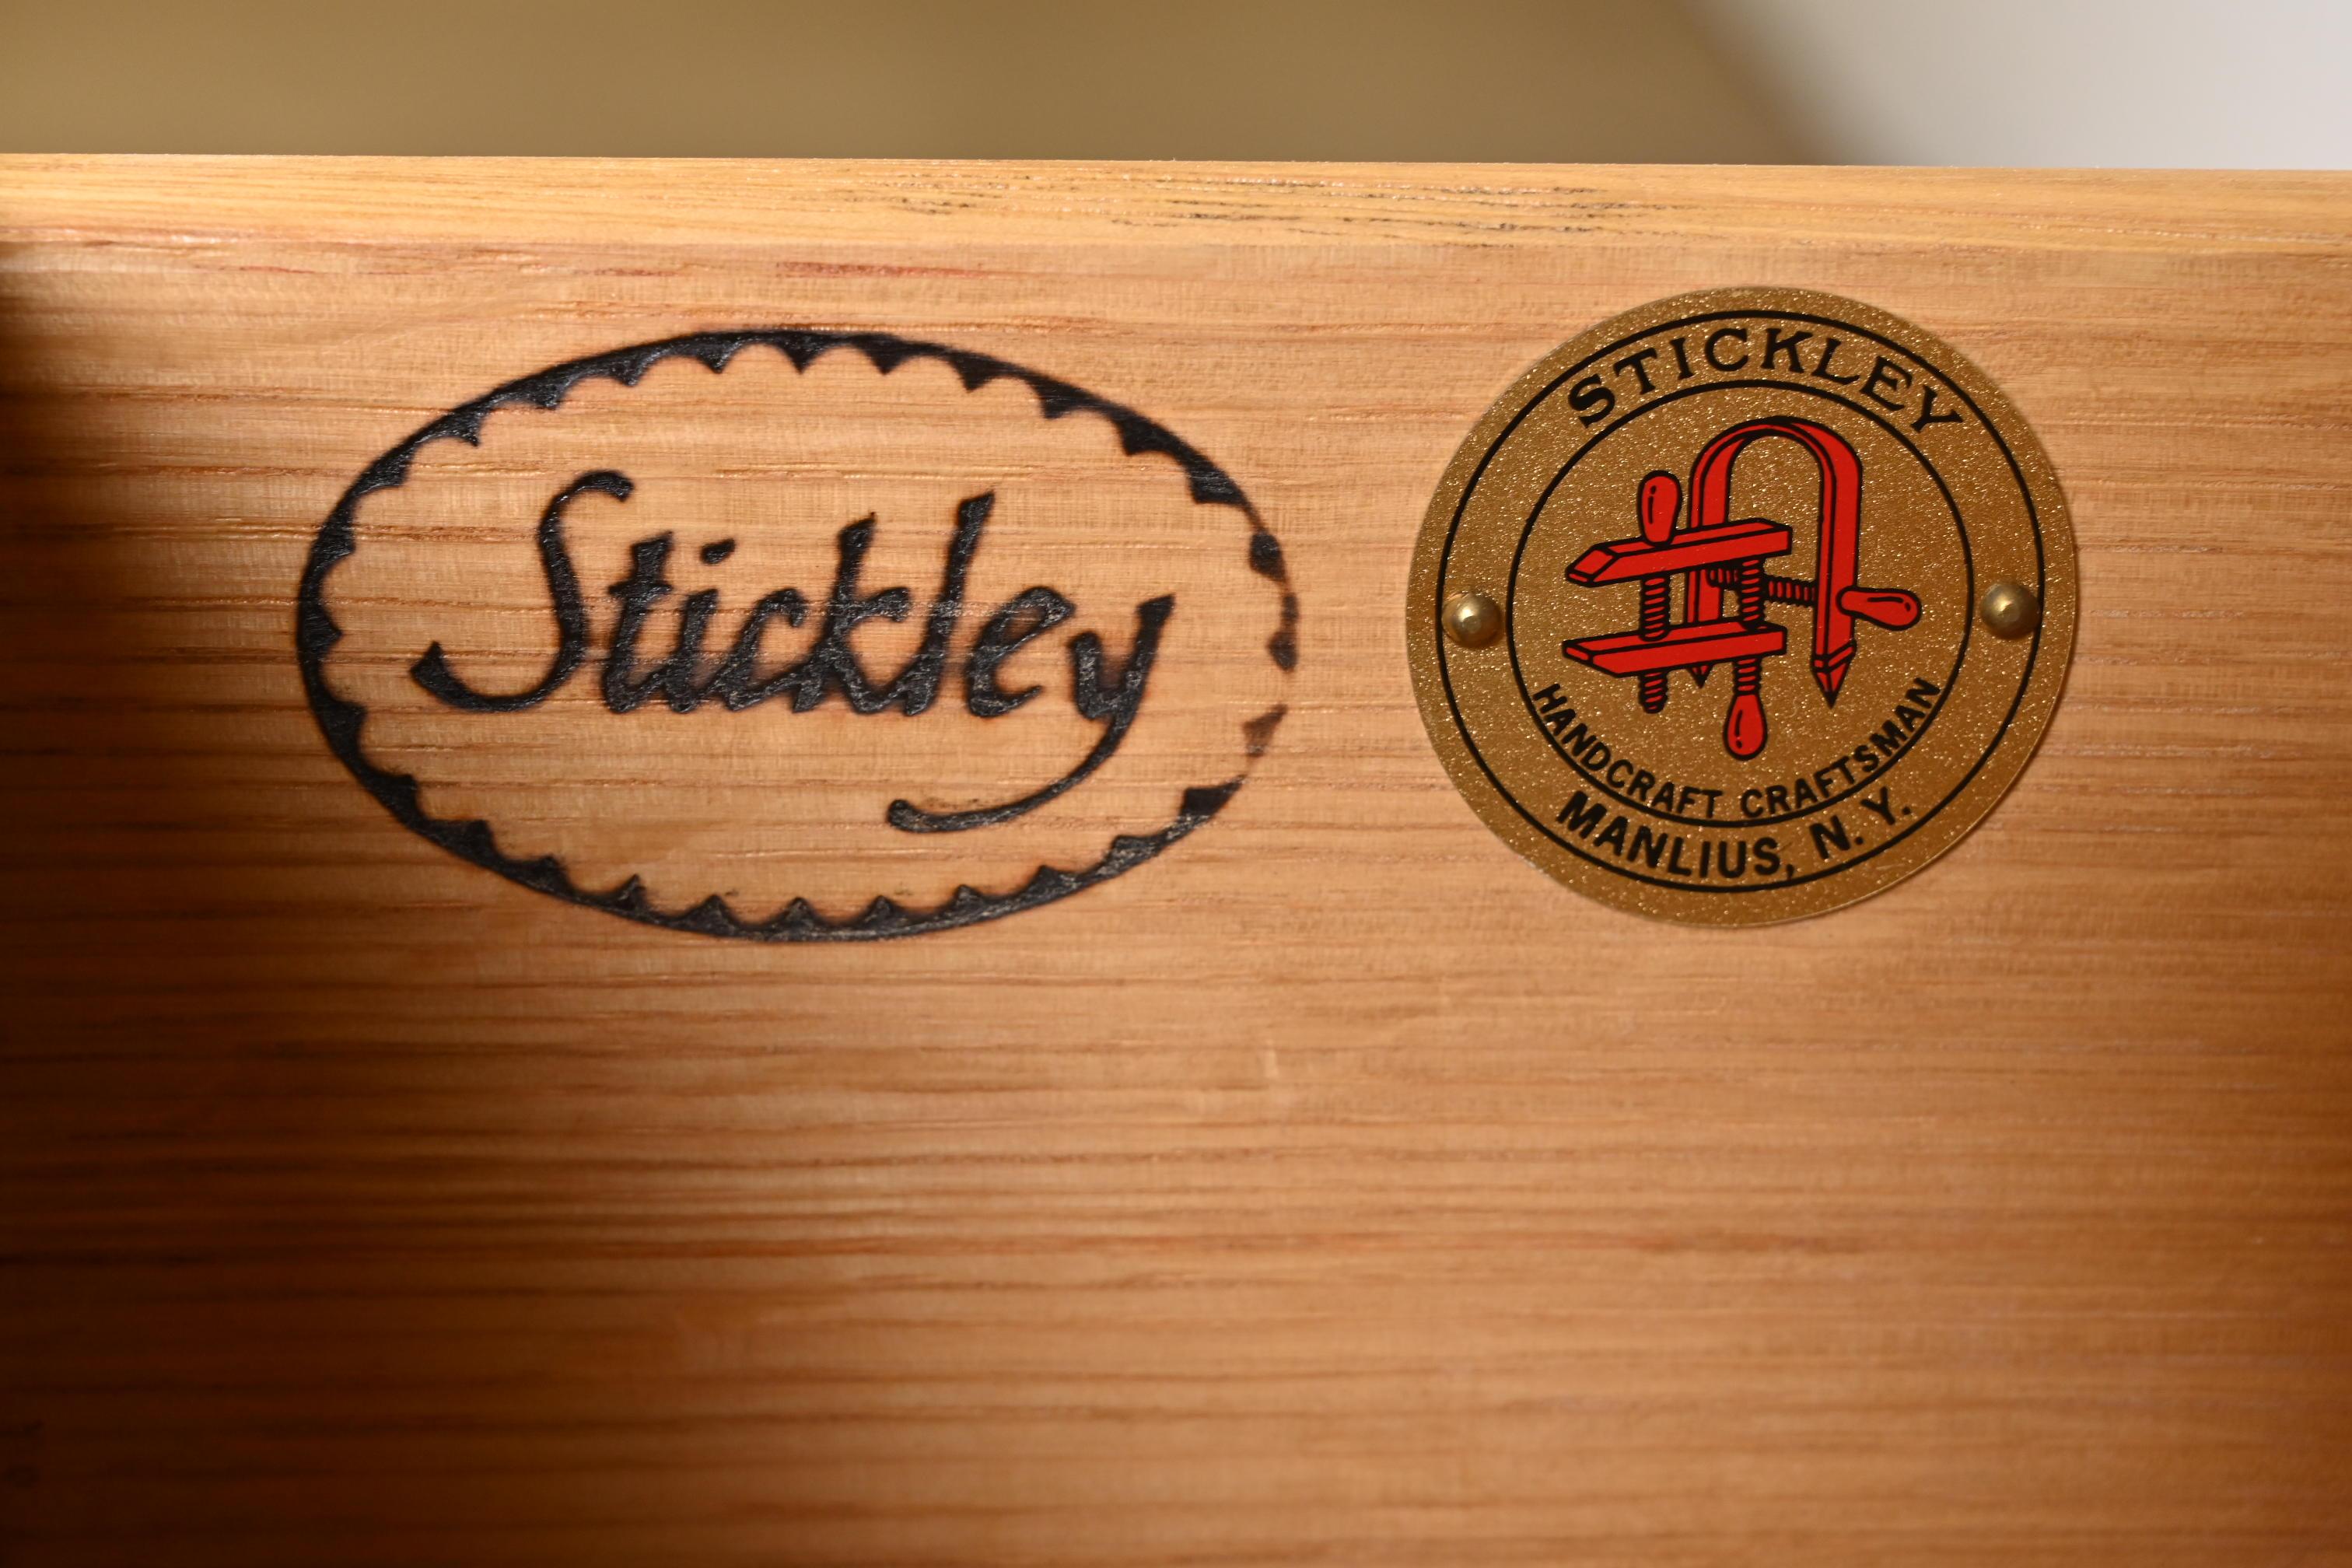 Stickley Mission Oak Arts & Crafts Media Armoire Cabinet For Sale 1